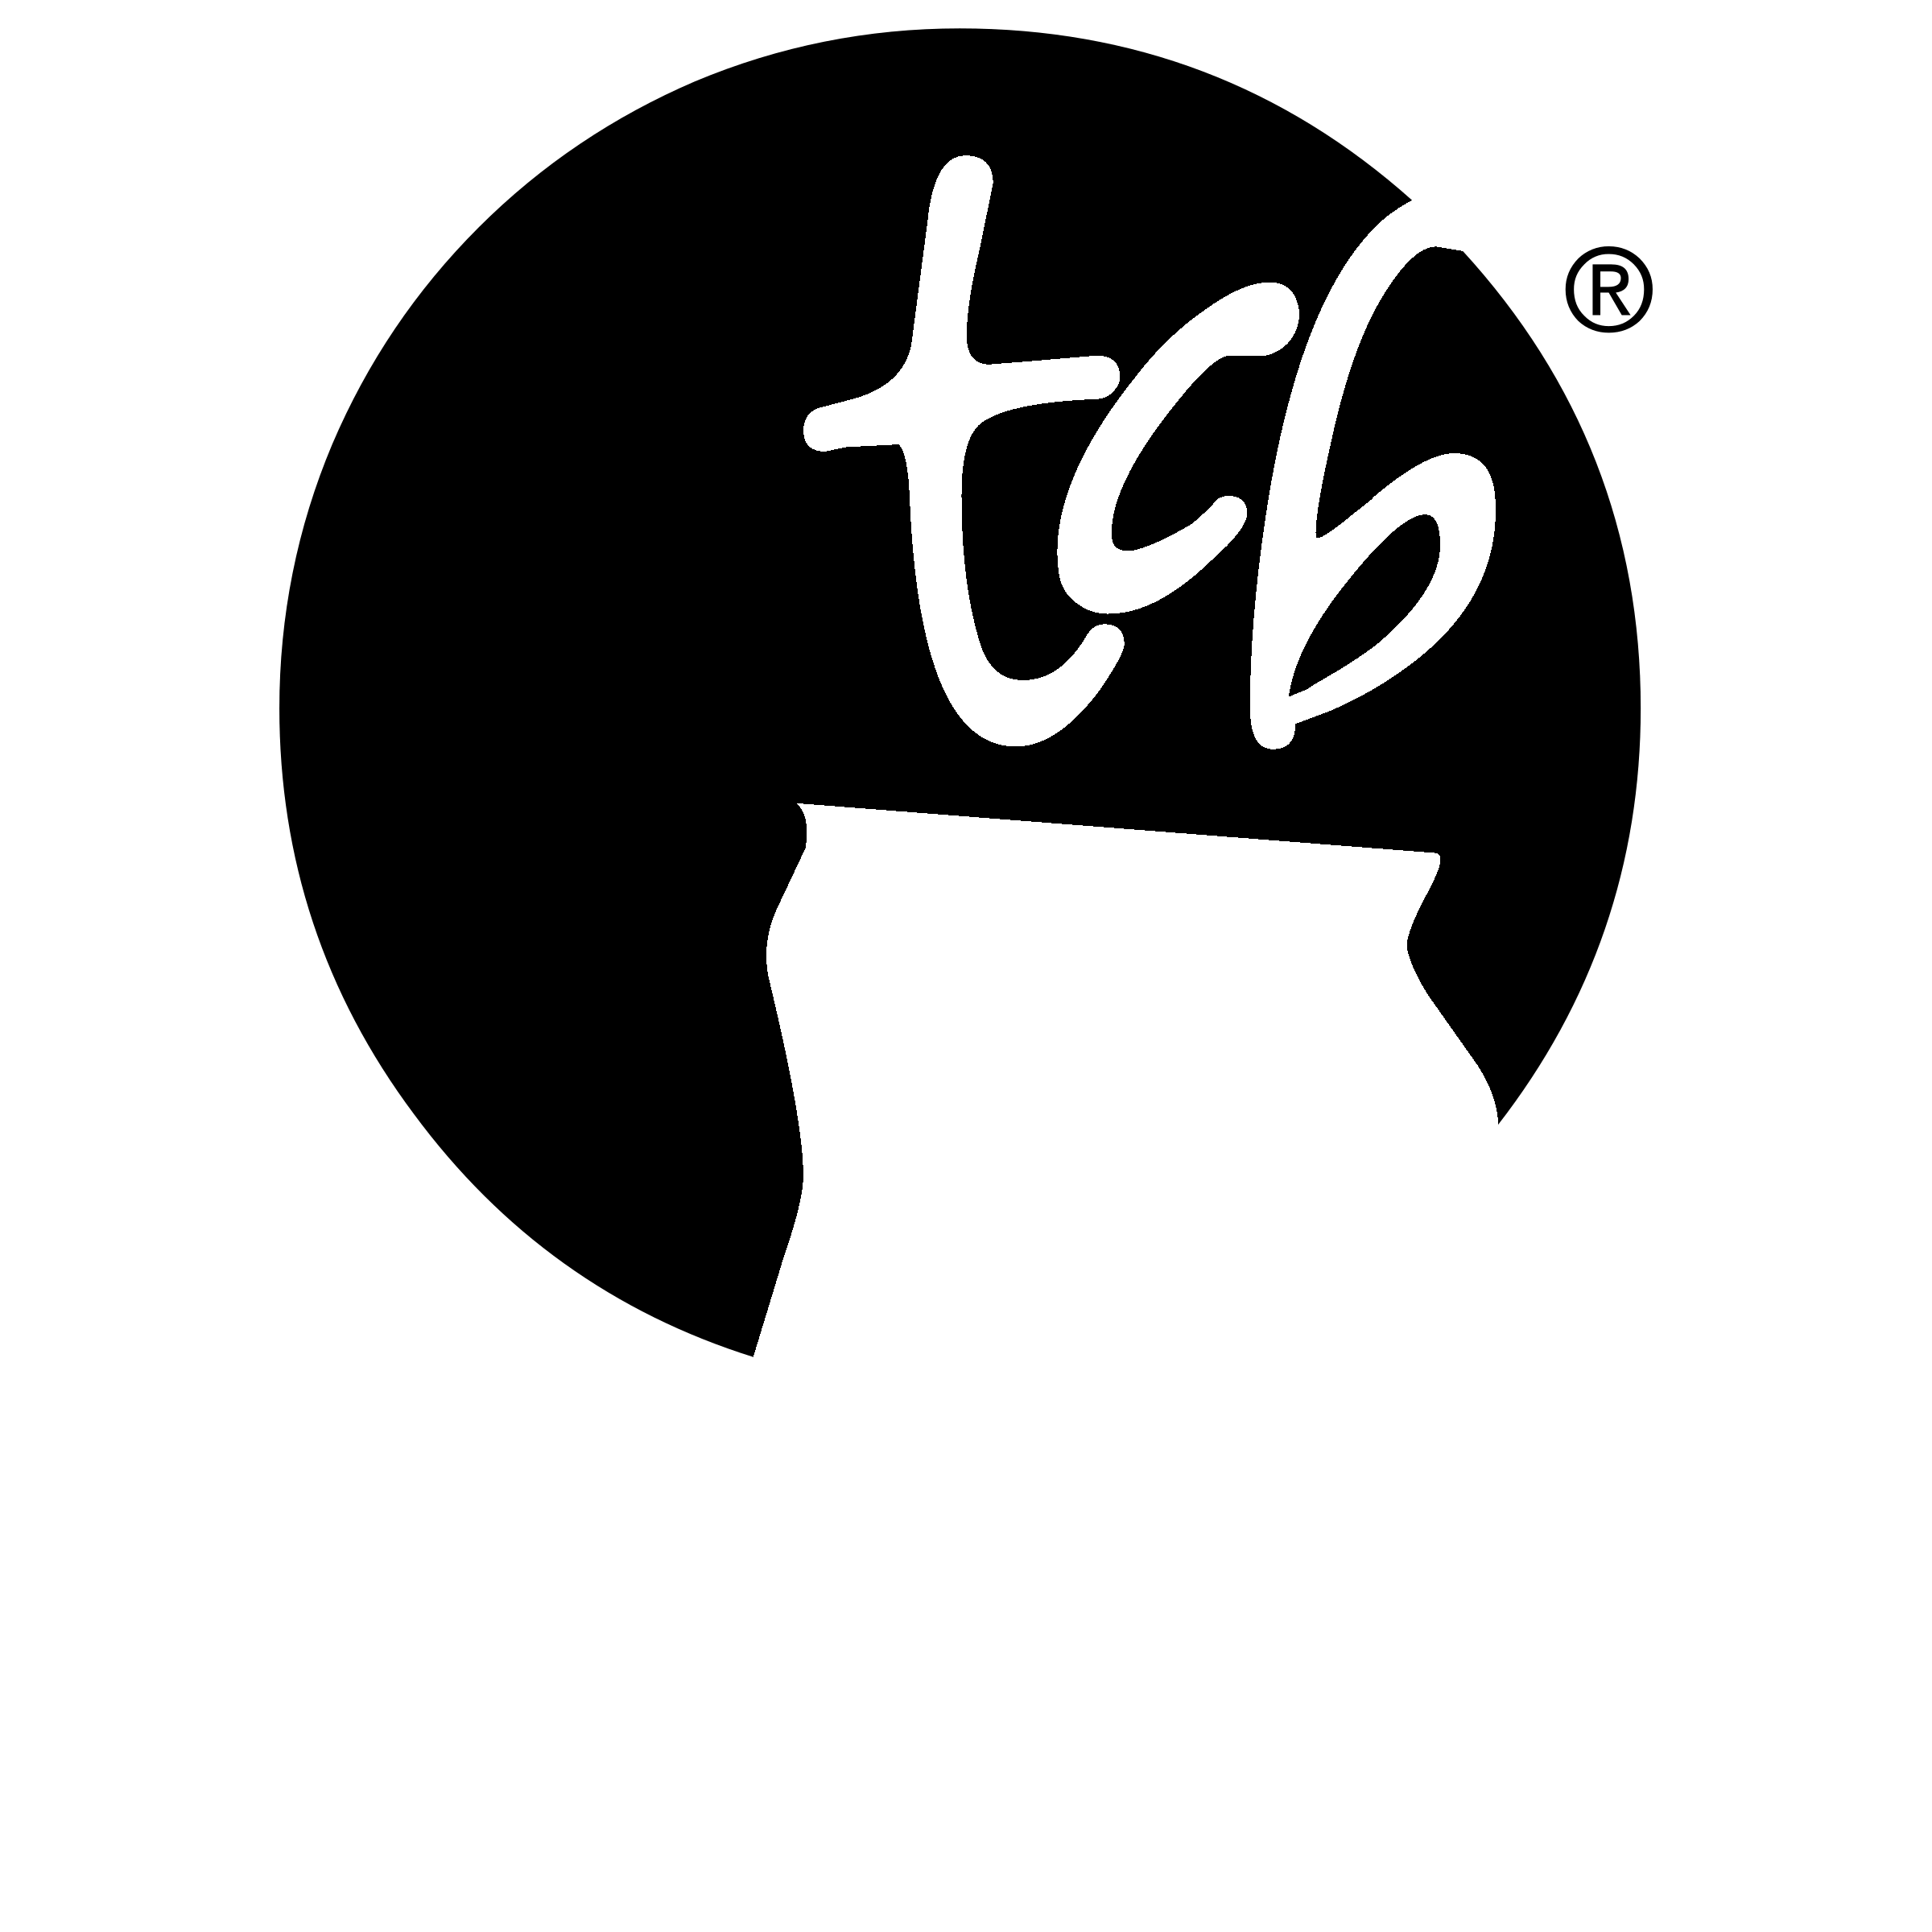 TCB Logo - TCB Logo PNG Transparent & SVG Vector - Freebie Supply